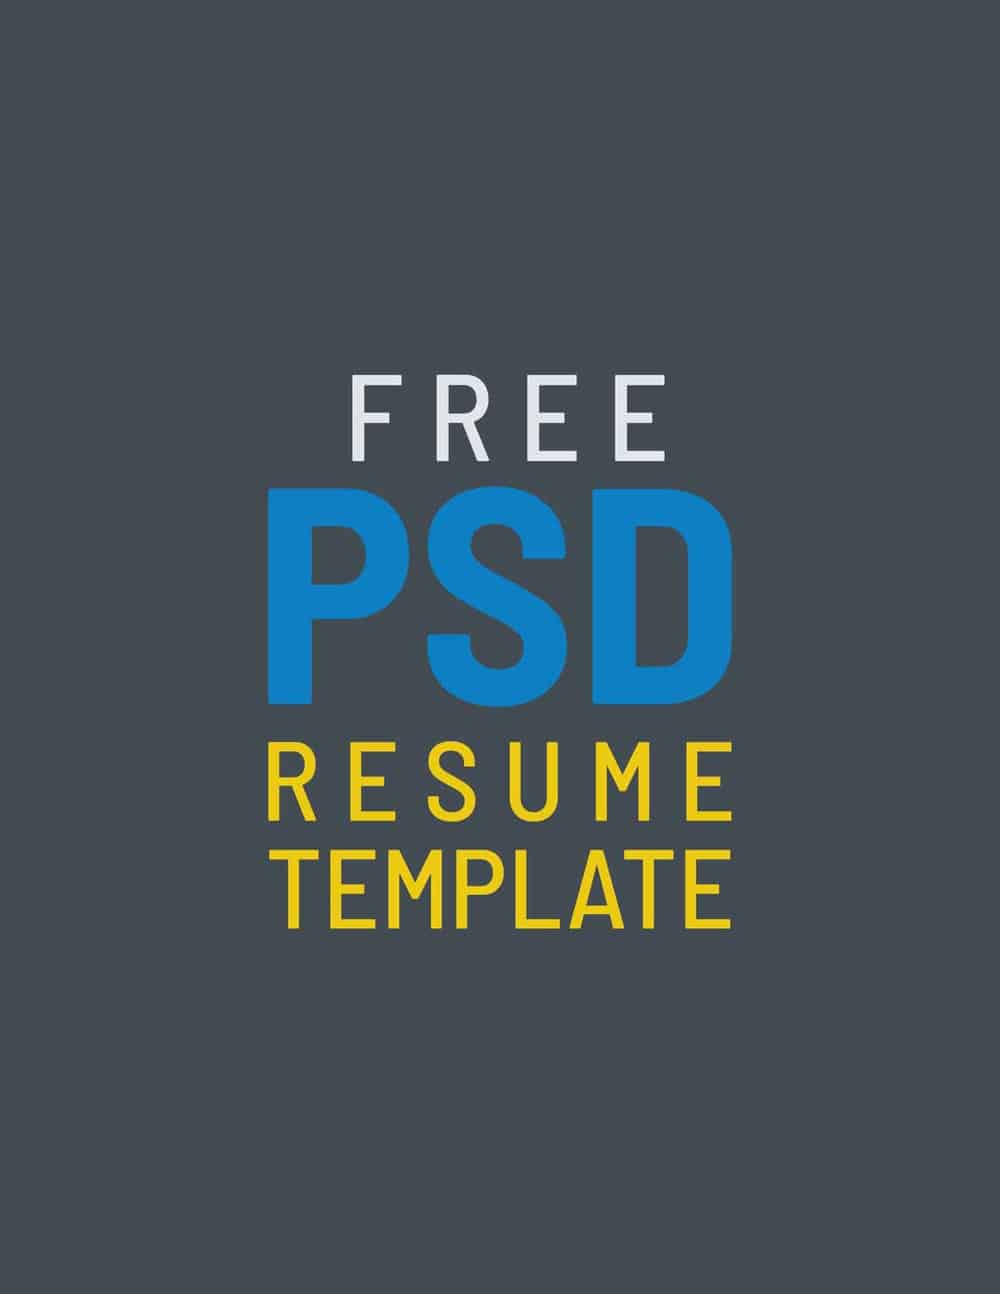 Free PSD Resume Templates